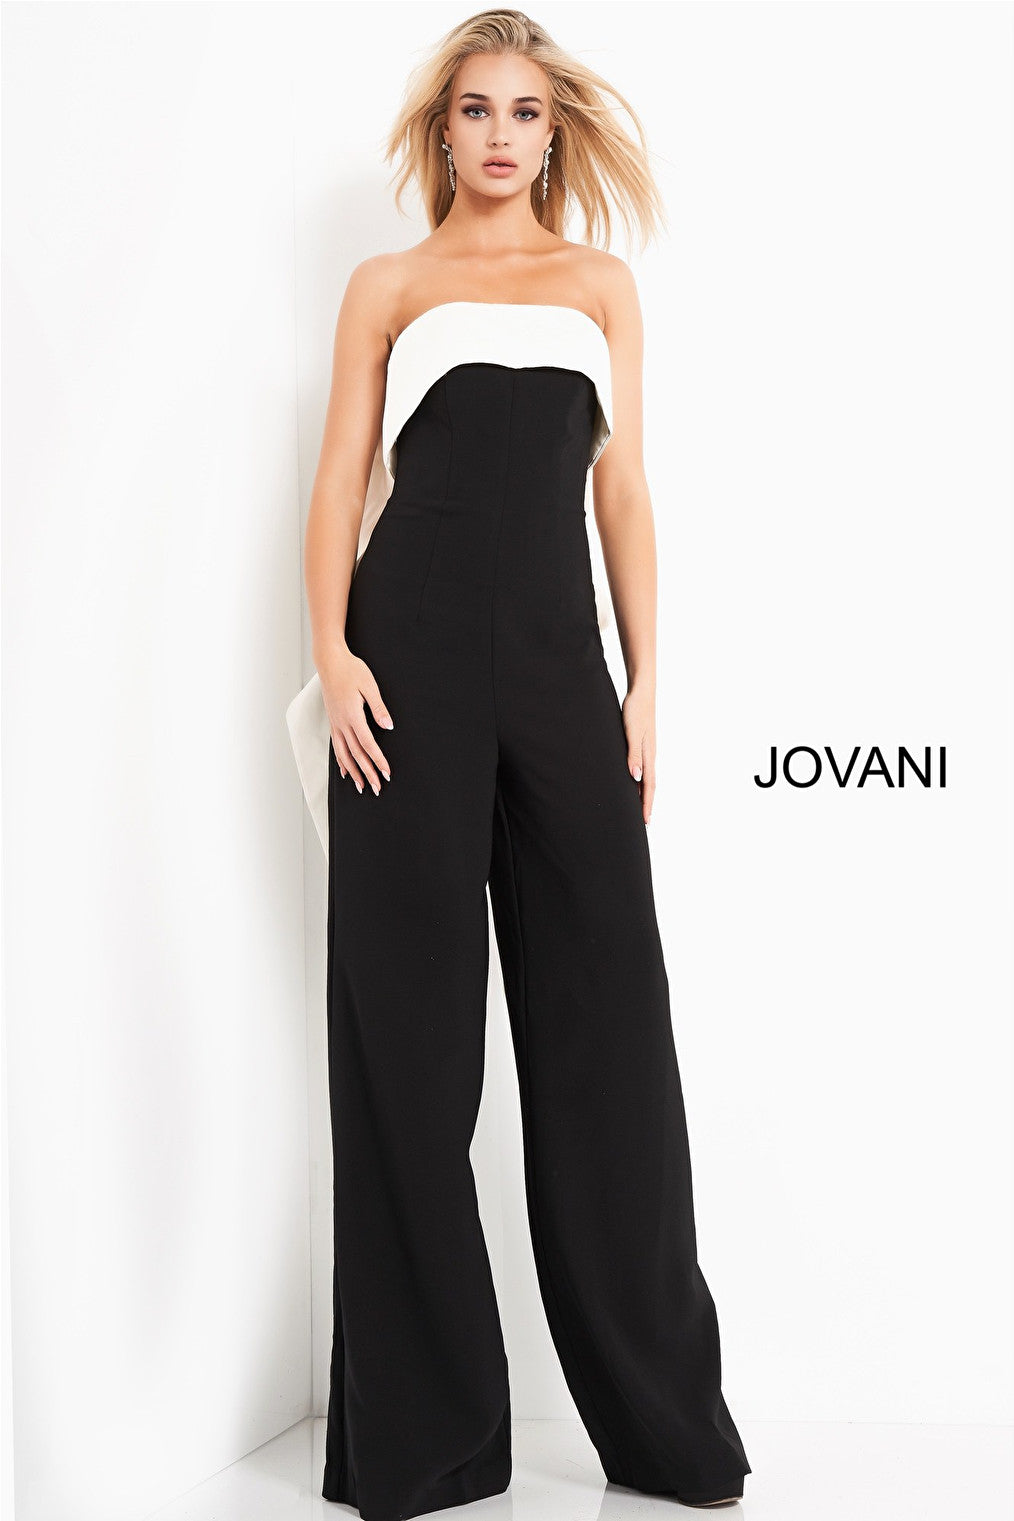 Jovani 04355 Black Ivory Strapless Evening jumpsuit